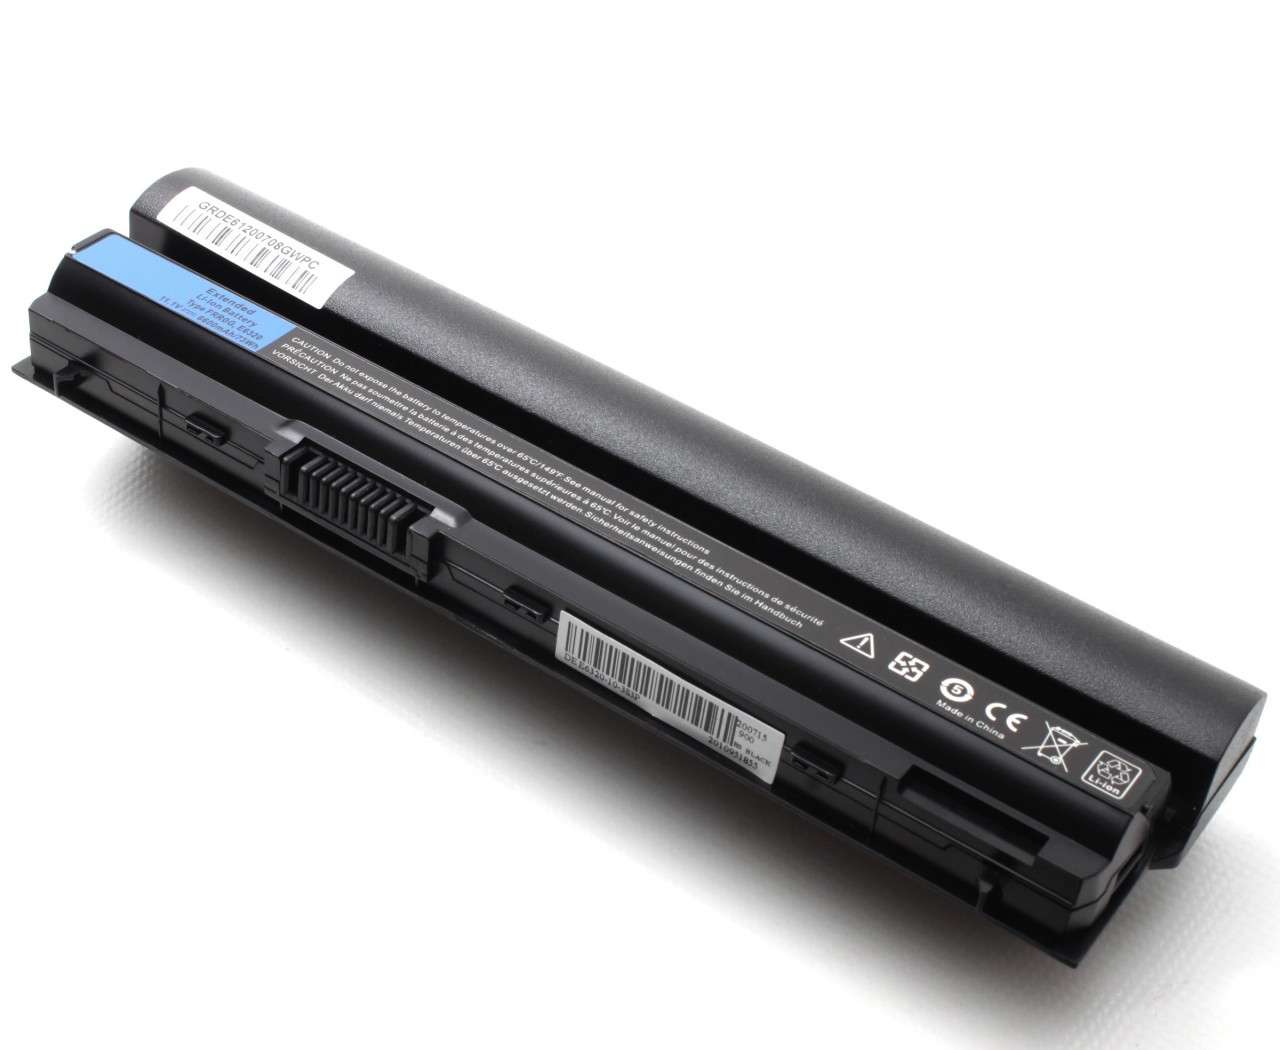 Baterie Dell Latitude E6320 6600mAh imagine powerlaptop.ro 2021